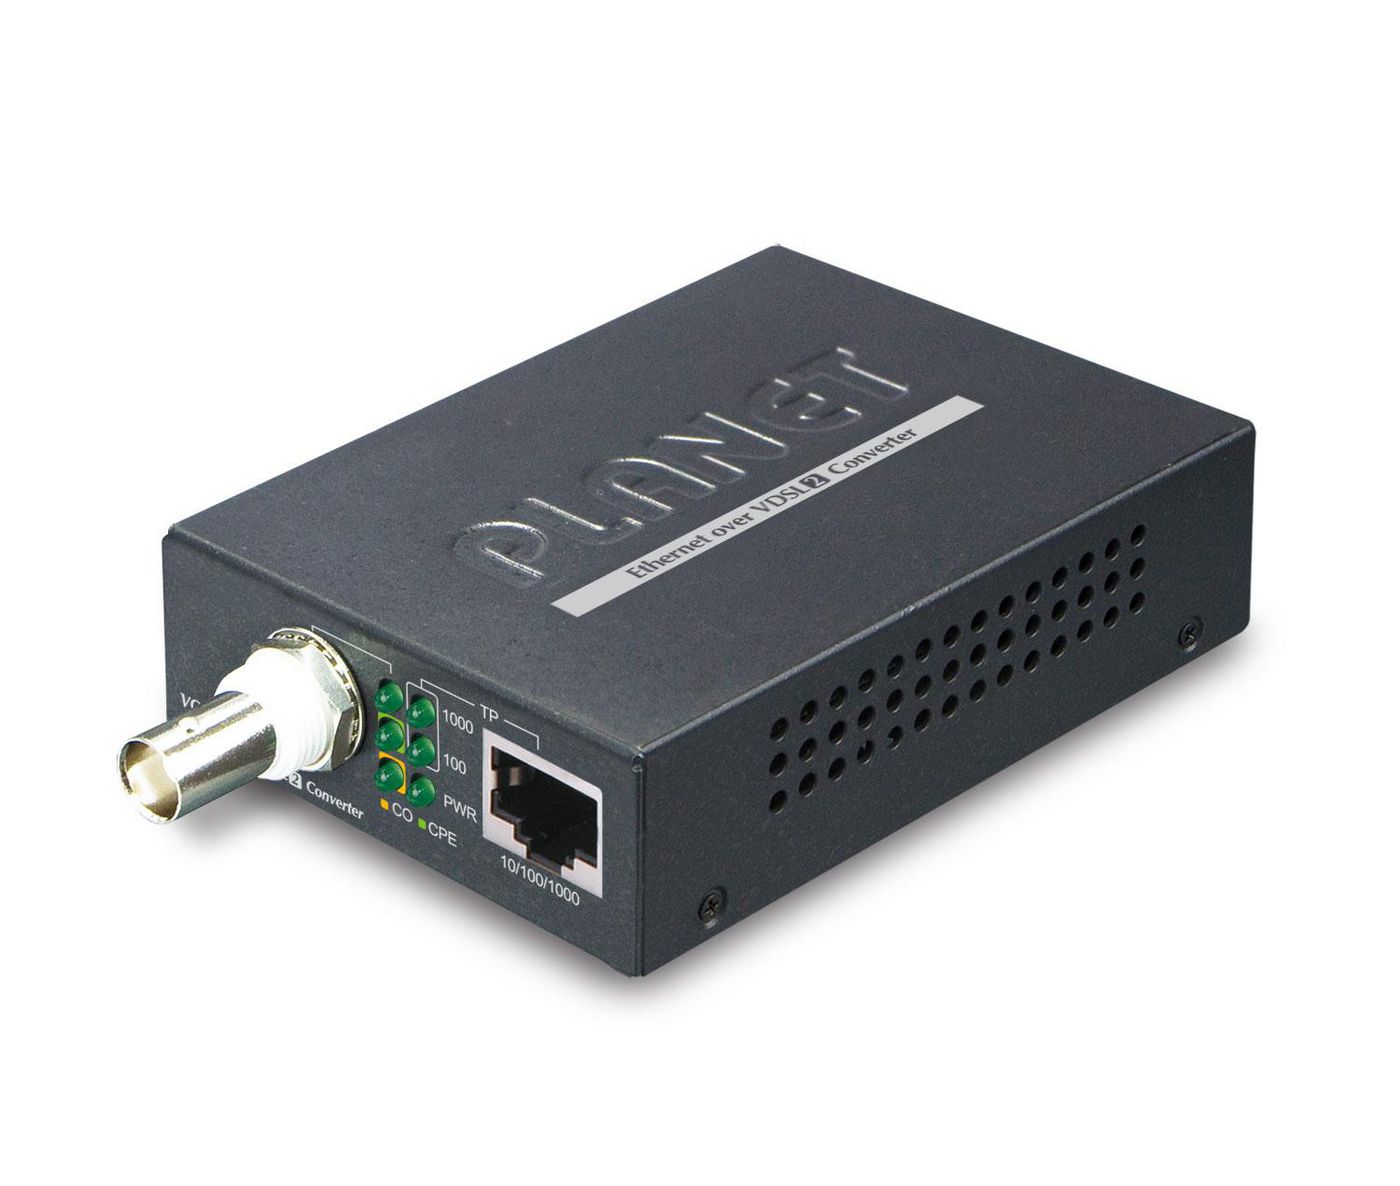 Planet VC-232G-UK 1-port 101001000T Ethernet 